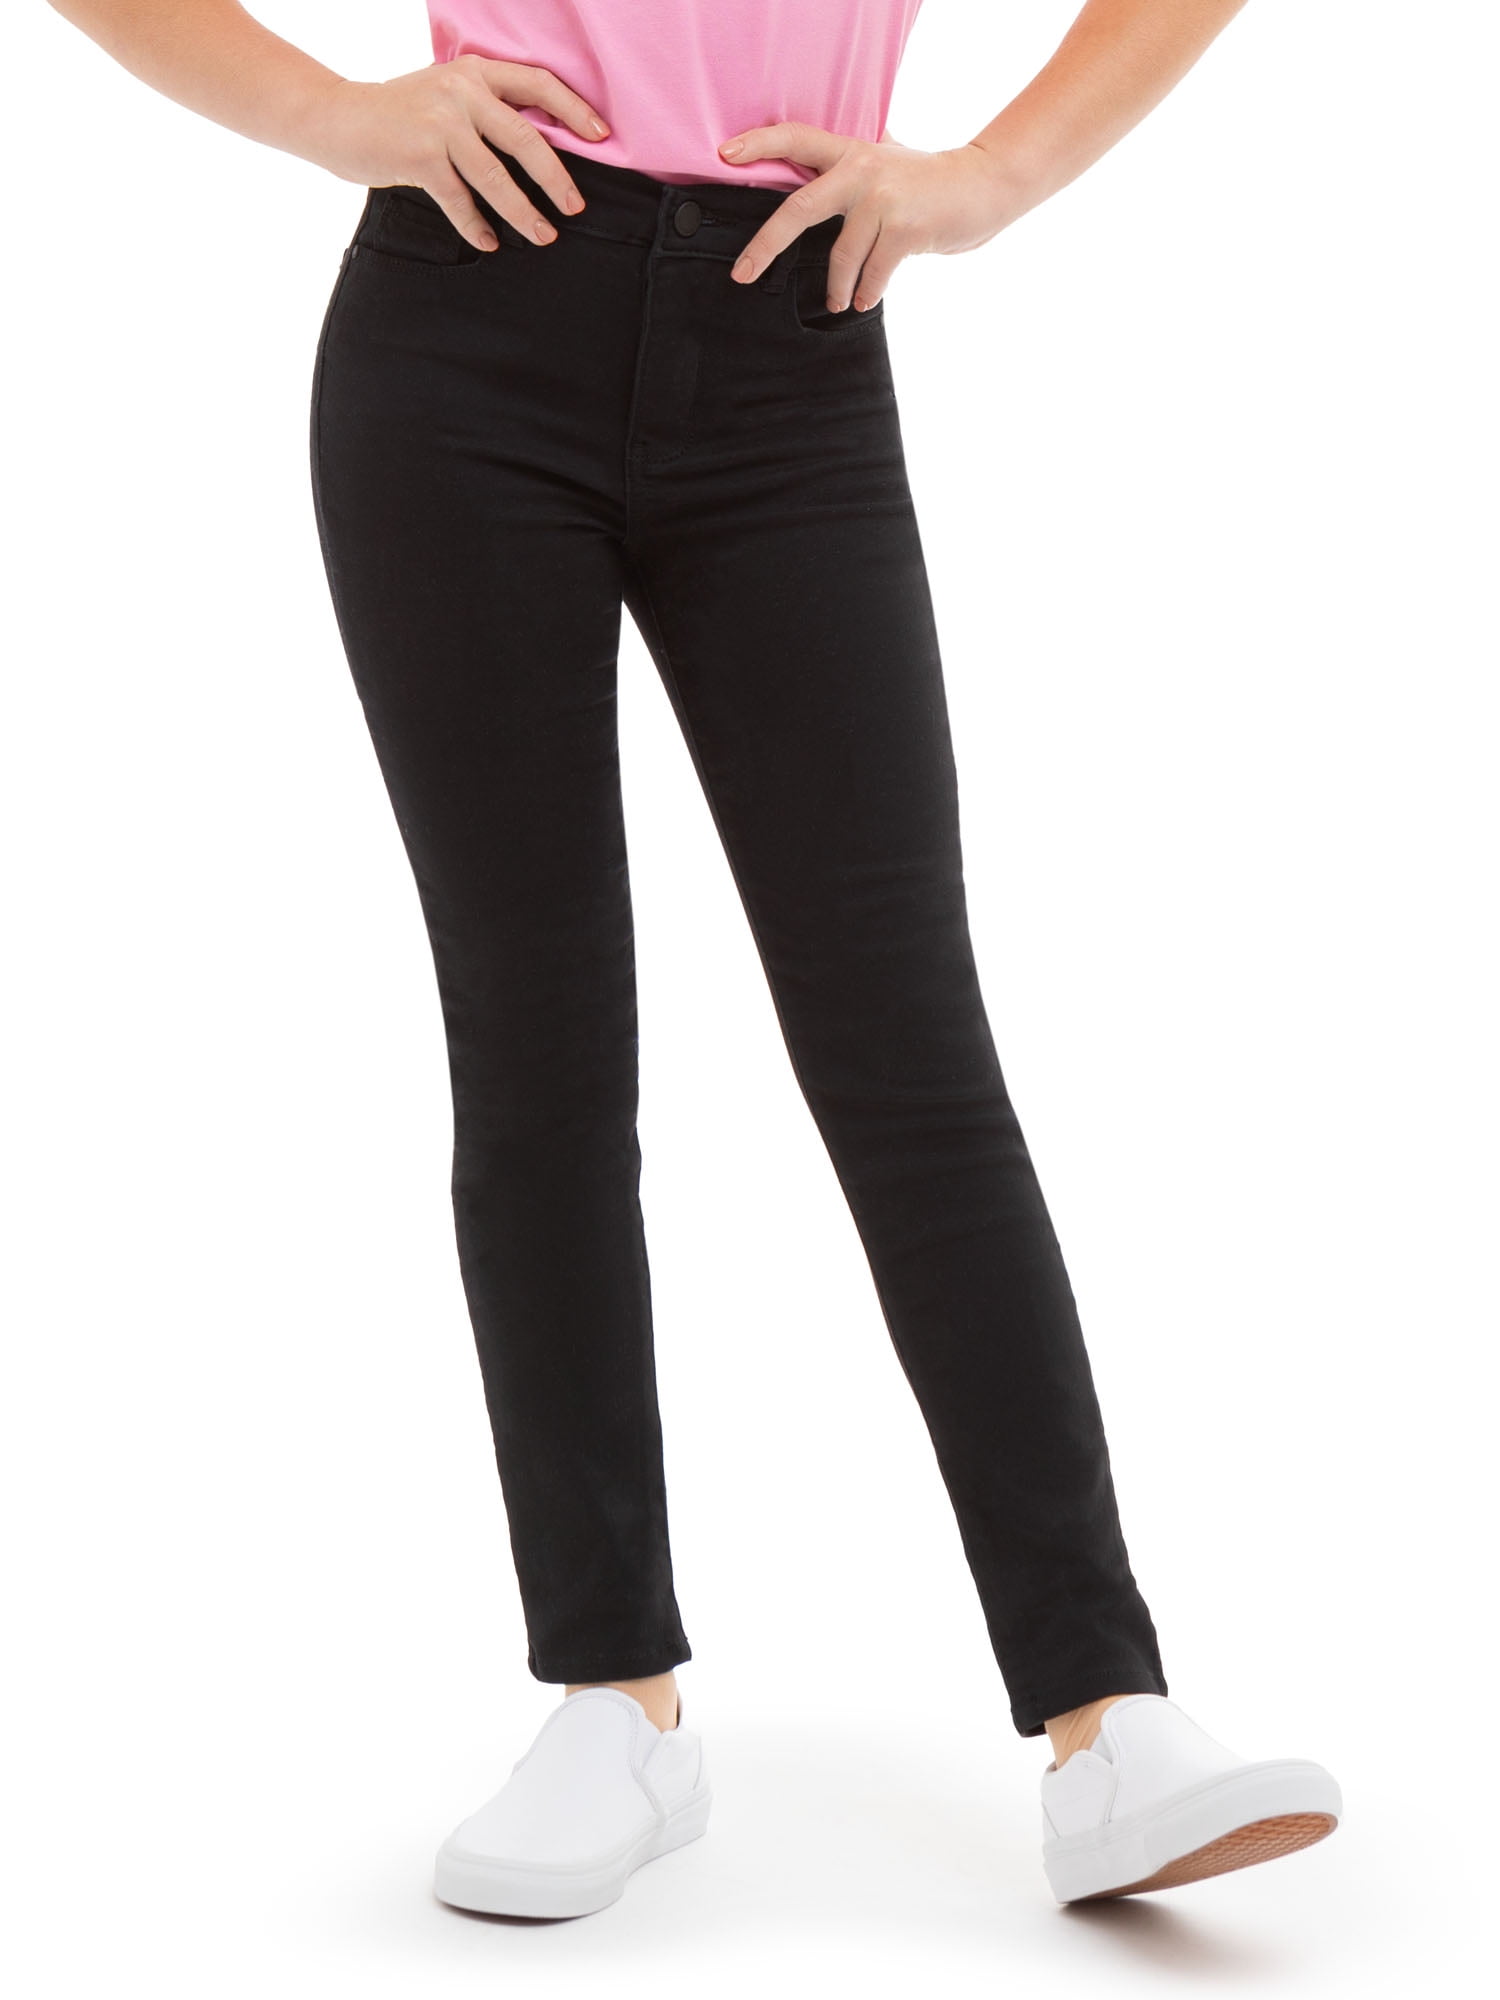 Girls Soft Cotton UPF 50+ Jersey Pocket Pants | Black - City Threads USA